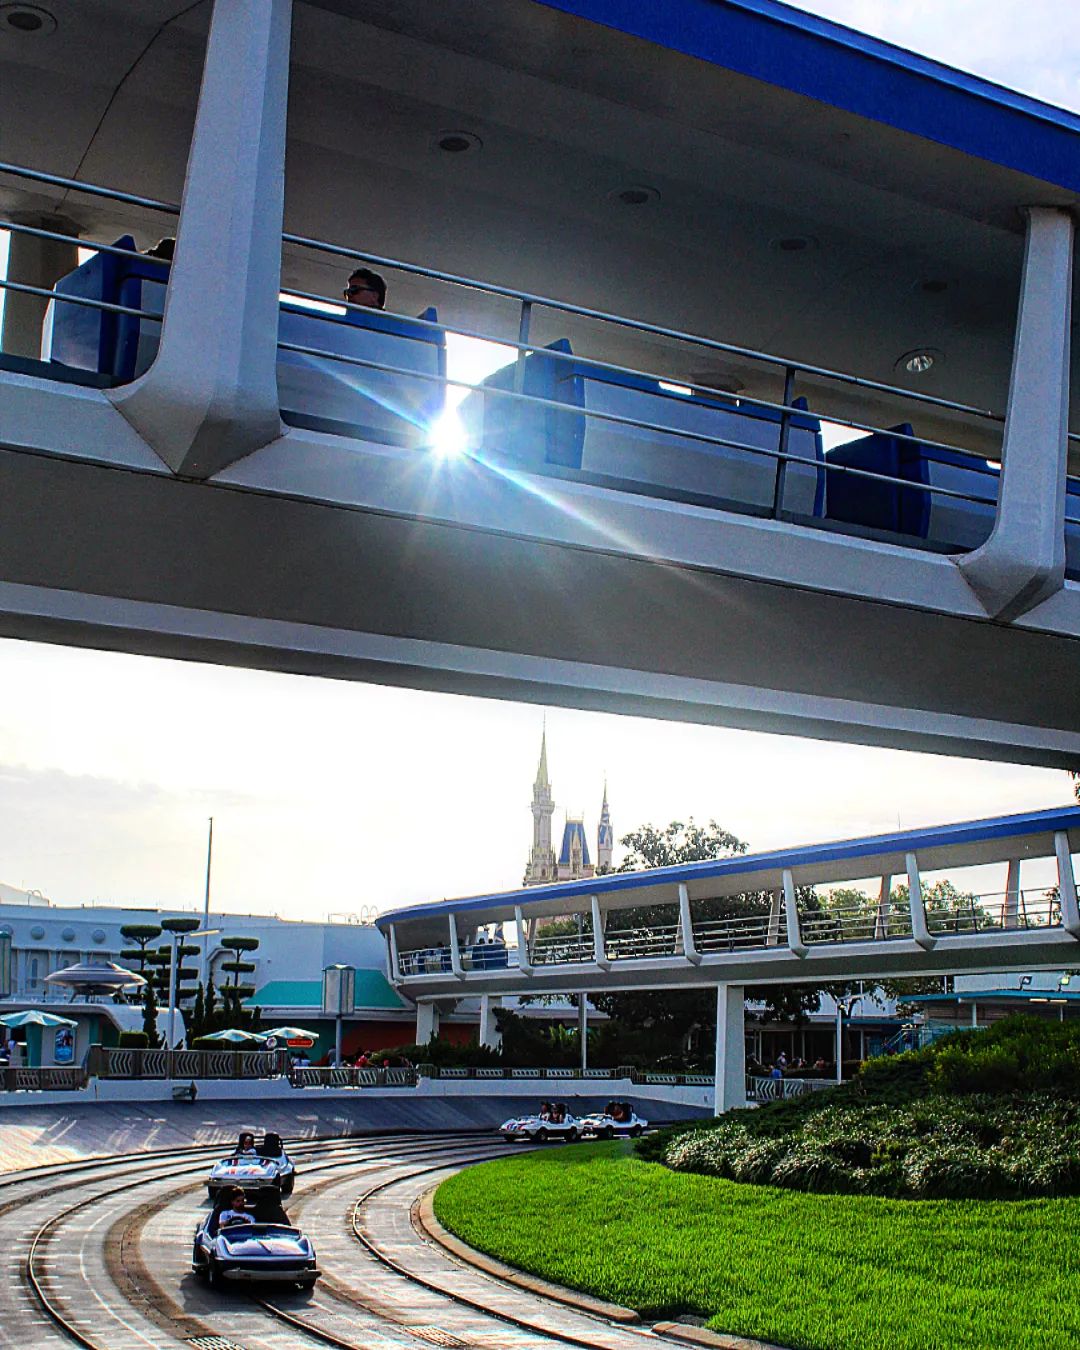 Tomorrowland - Magic Kingdom at Walt Disney World